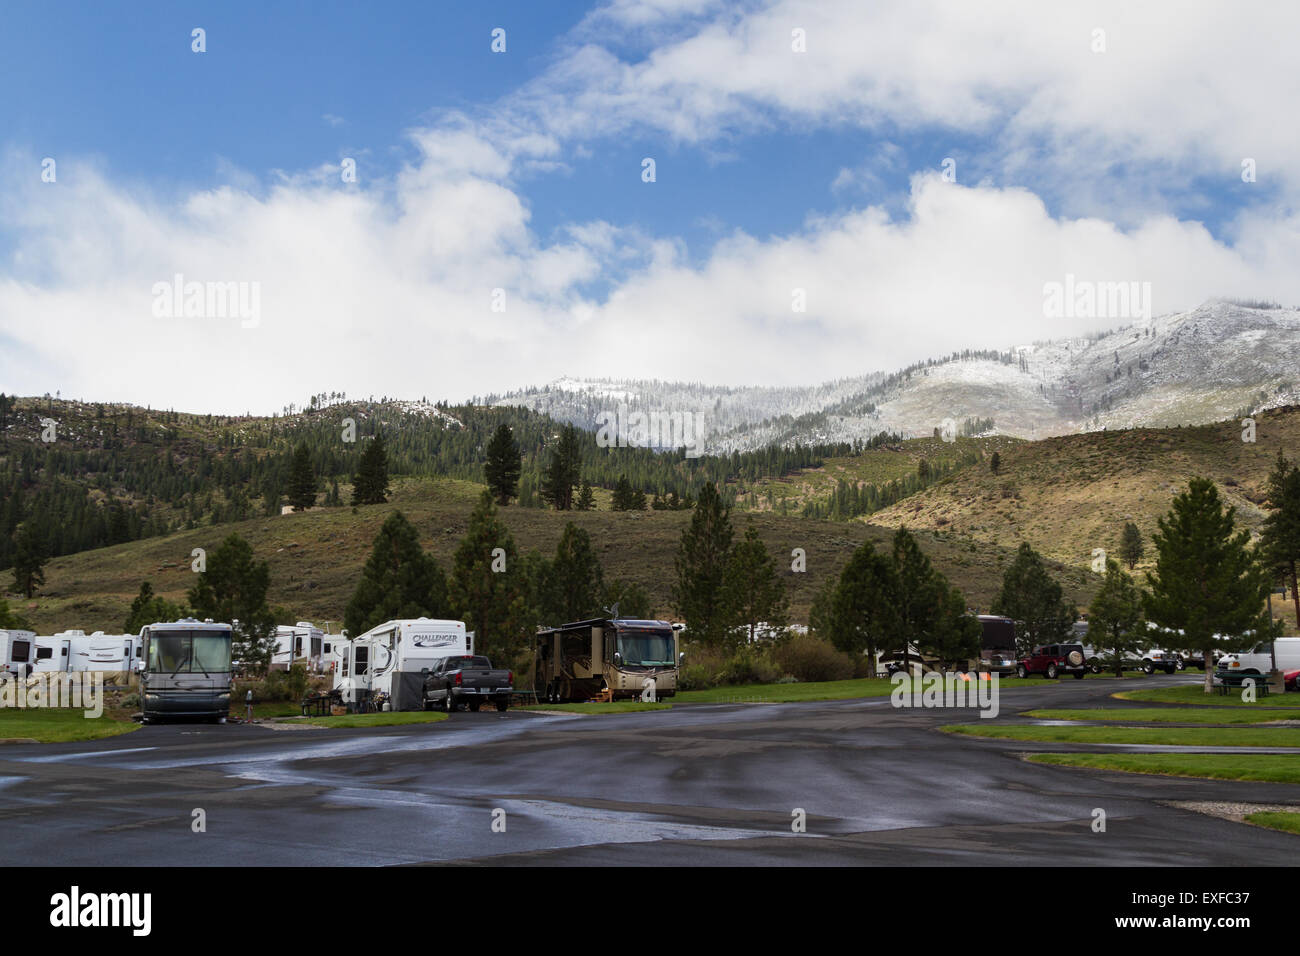 Gold Ranch RV resort, Verdi, Nevada - April 25 : Snow on the mountains ...